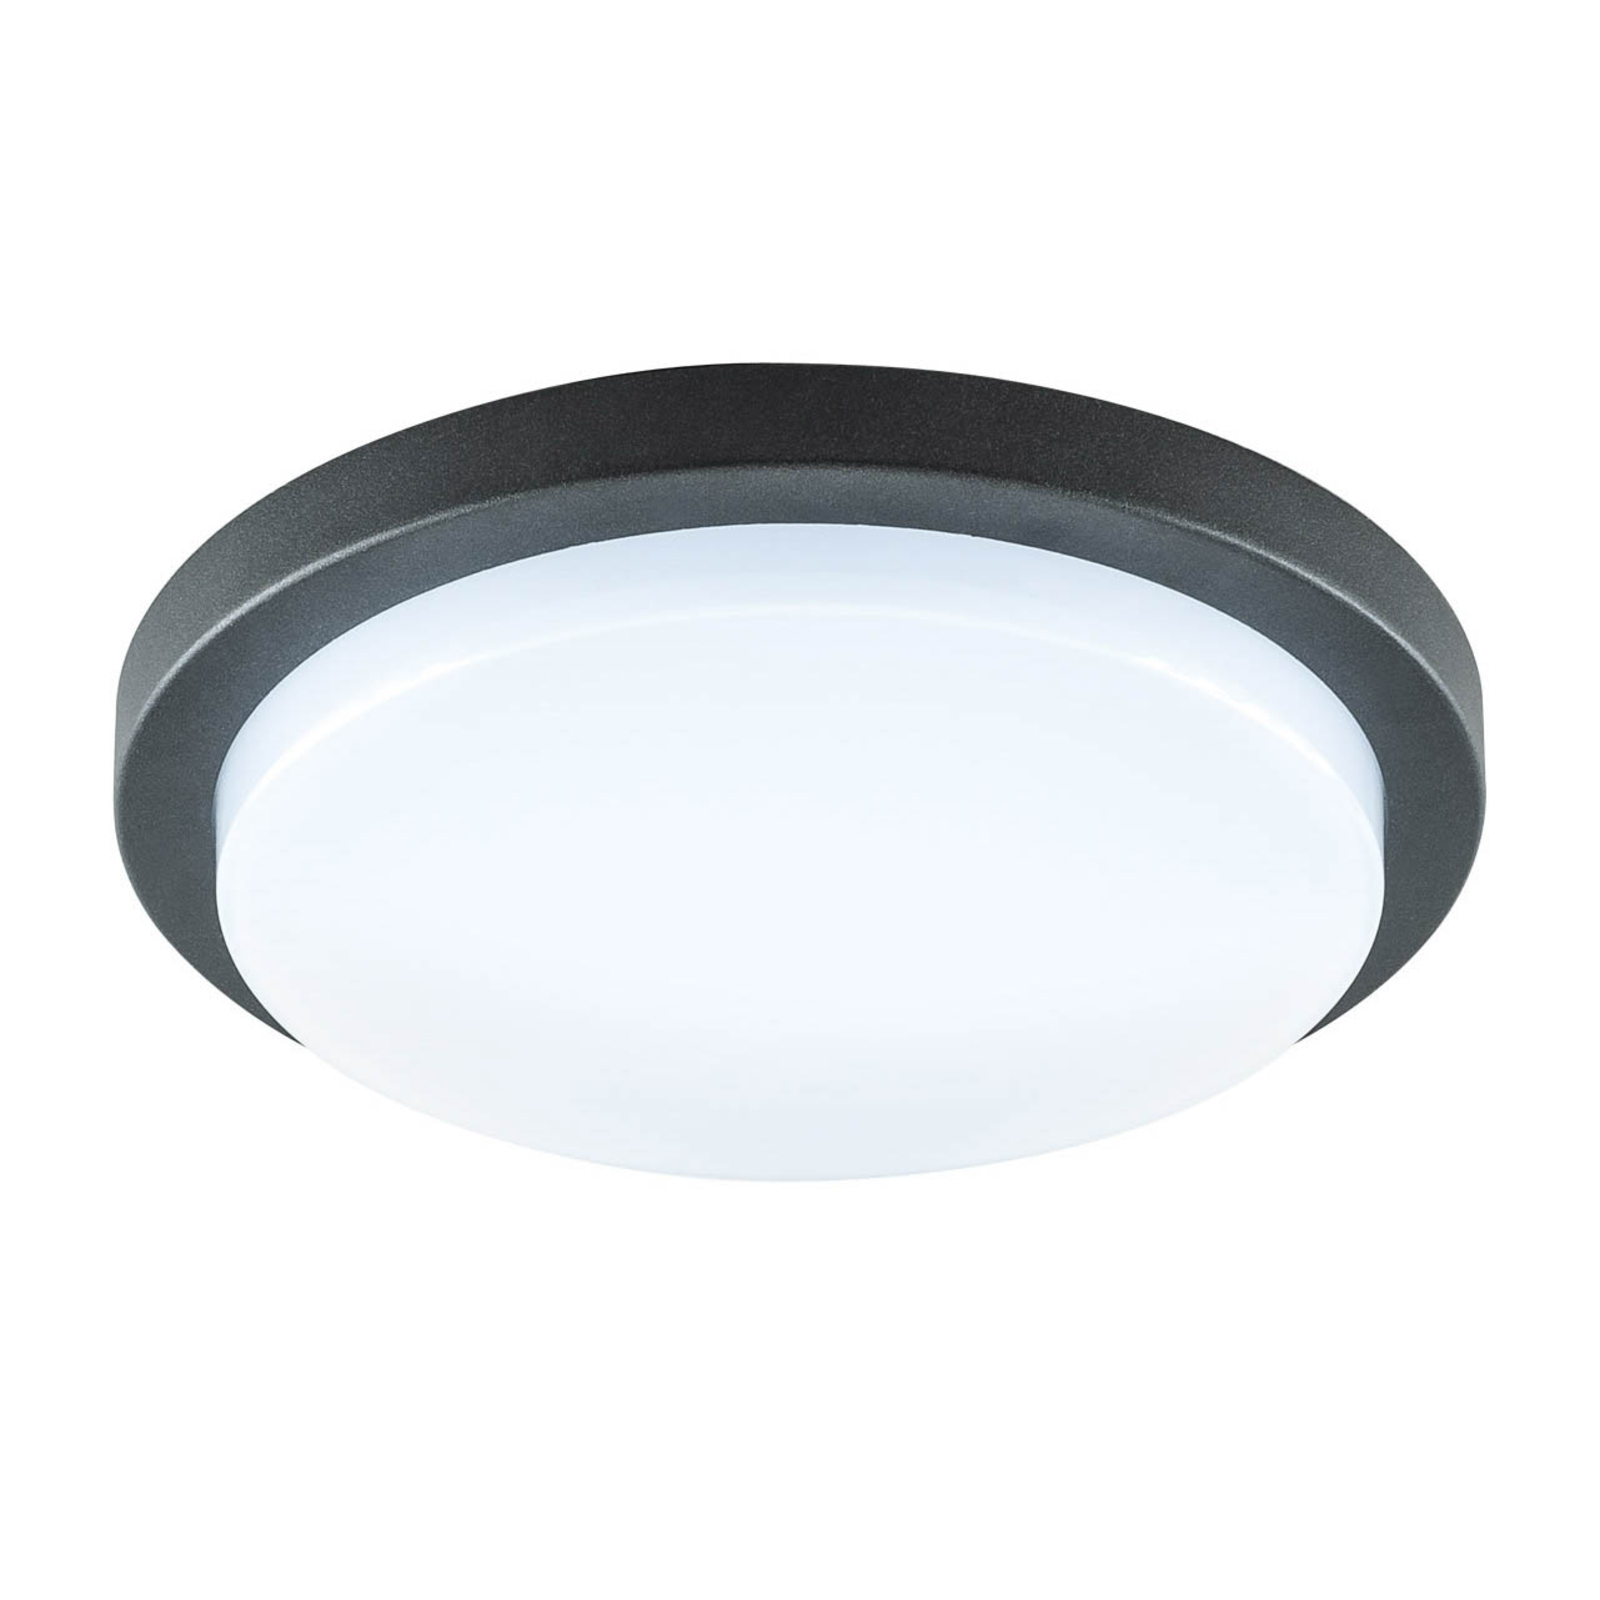 EVN Tectum LED buiten plafondlamp rond, Ø 24,6 cm